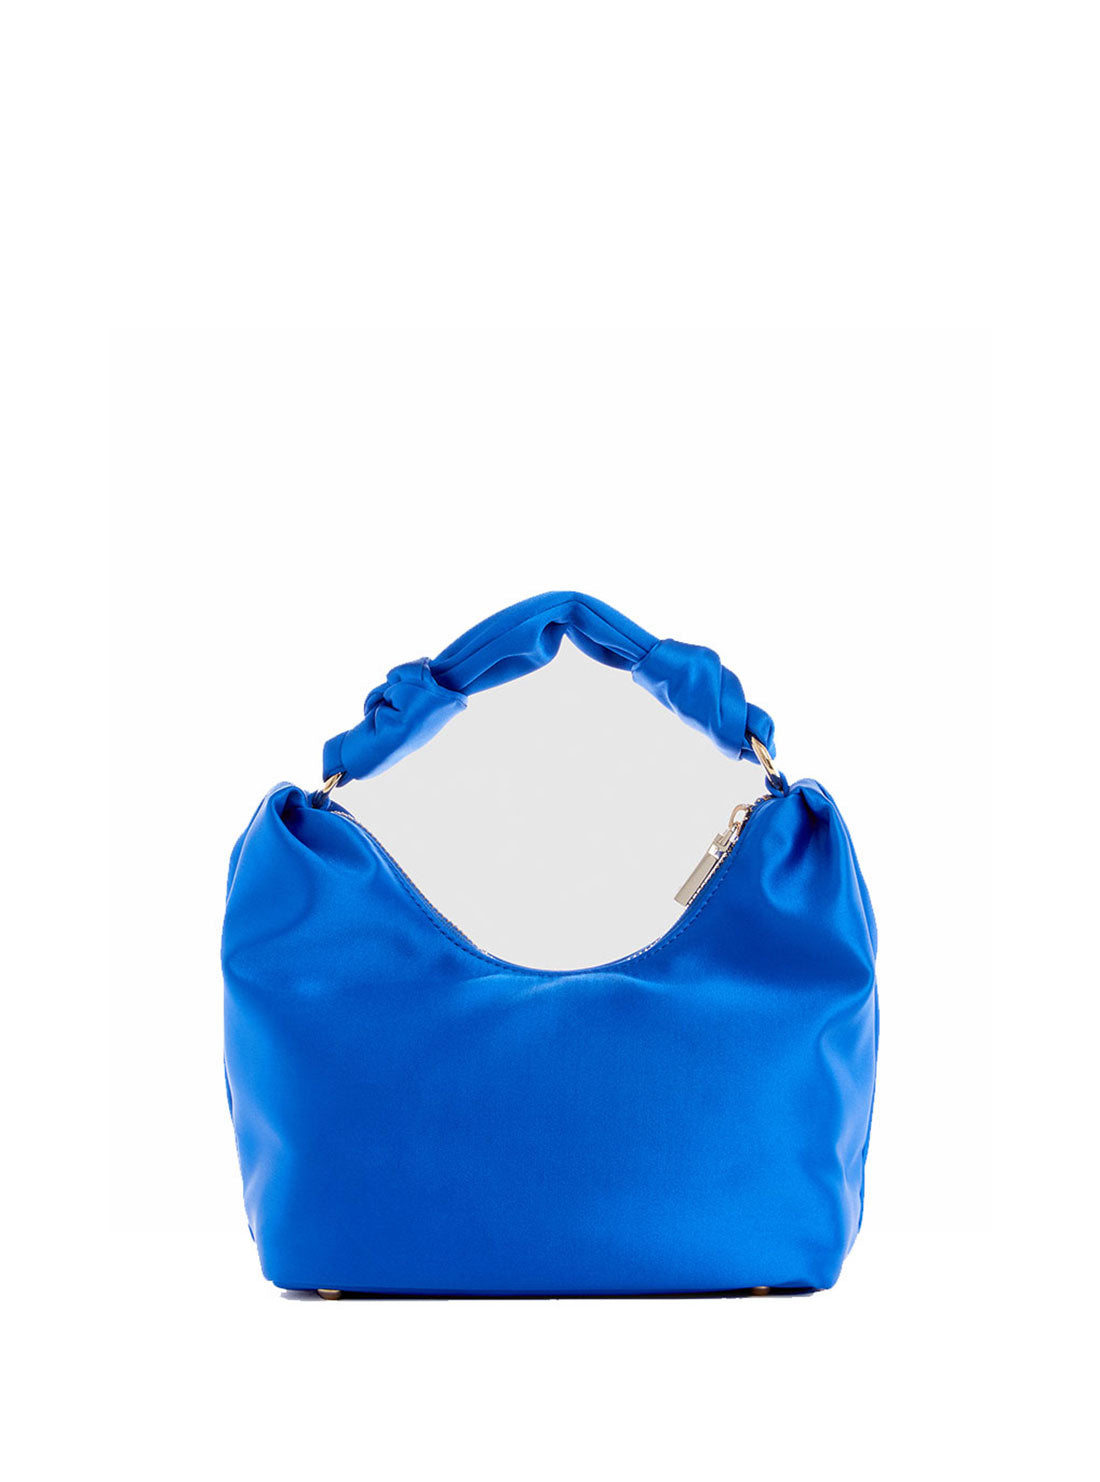 GUESS Women's Blue Velina Hobo Bag EG876502 Back View